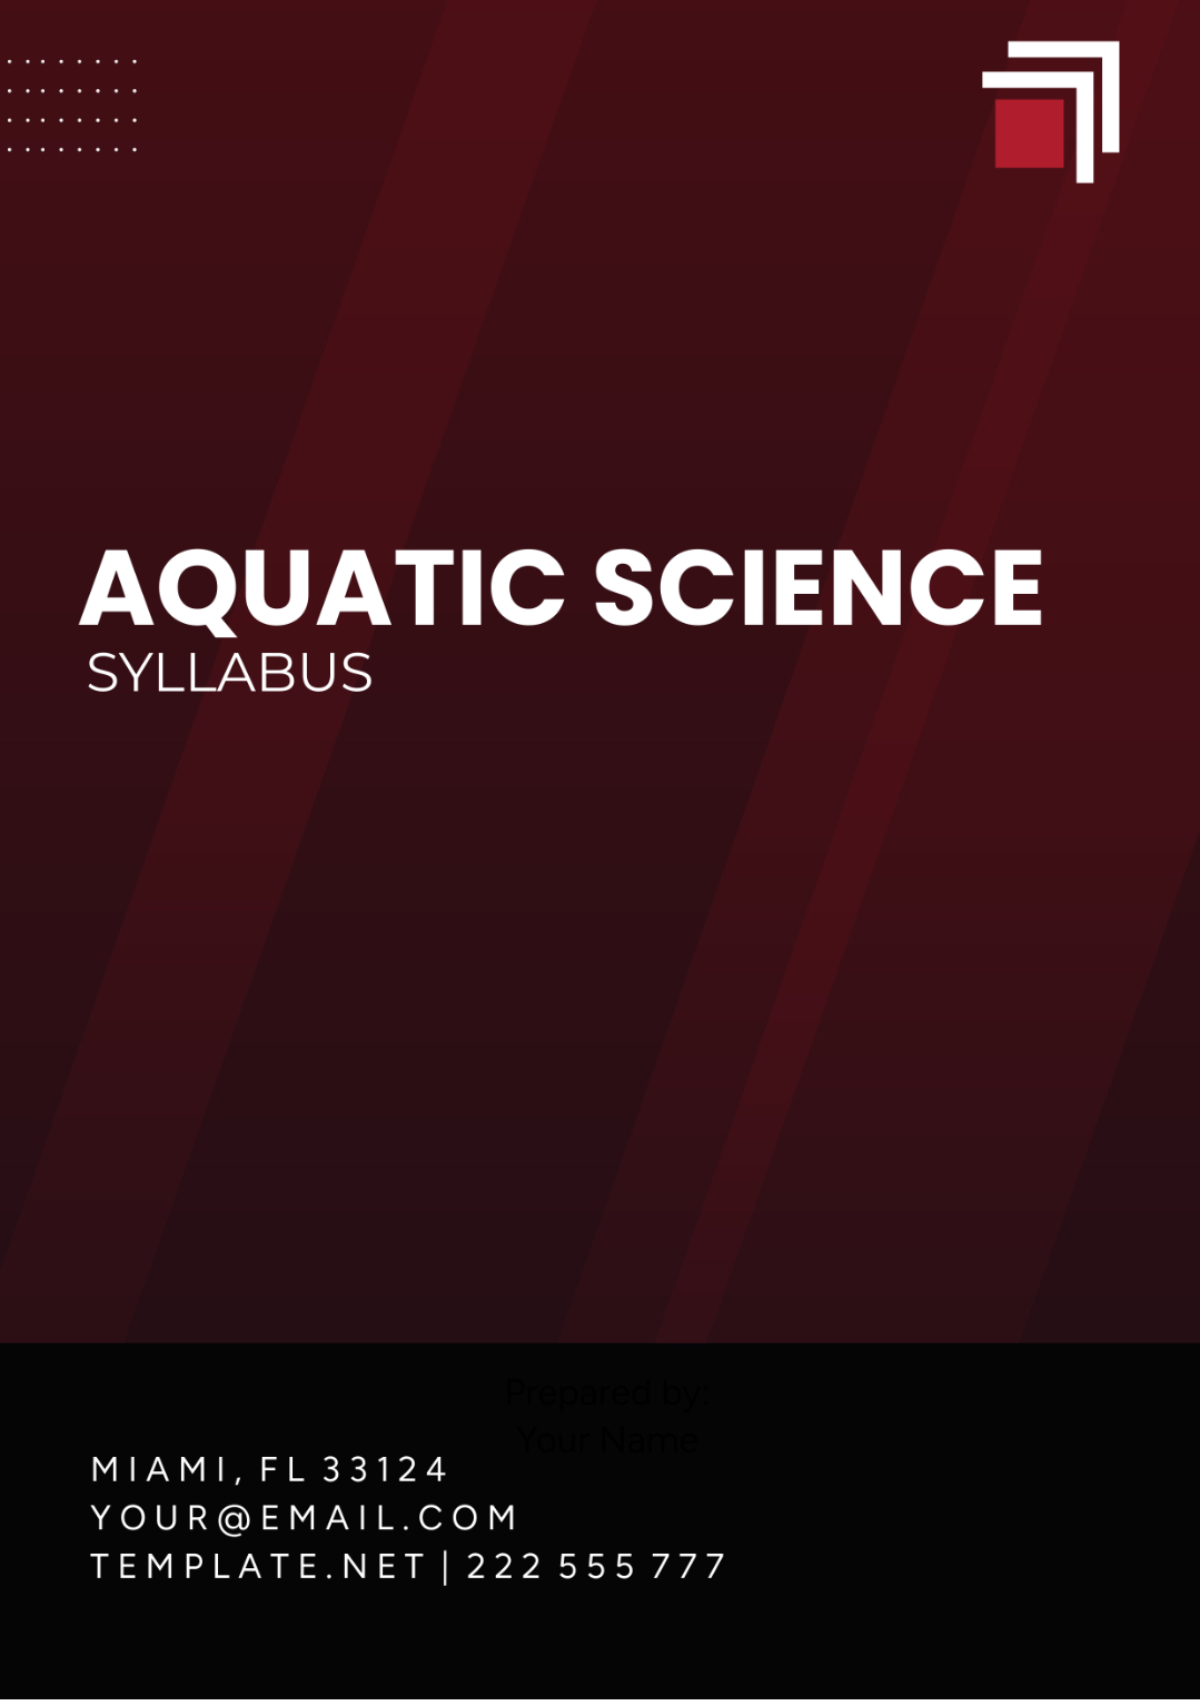 Aquatic Science Syllabus Template